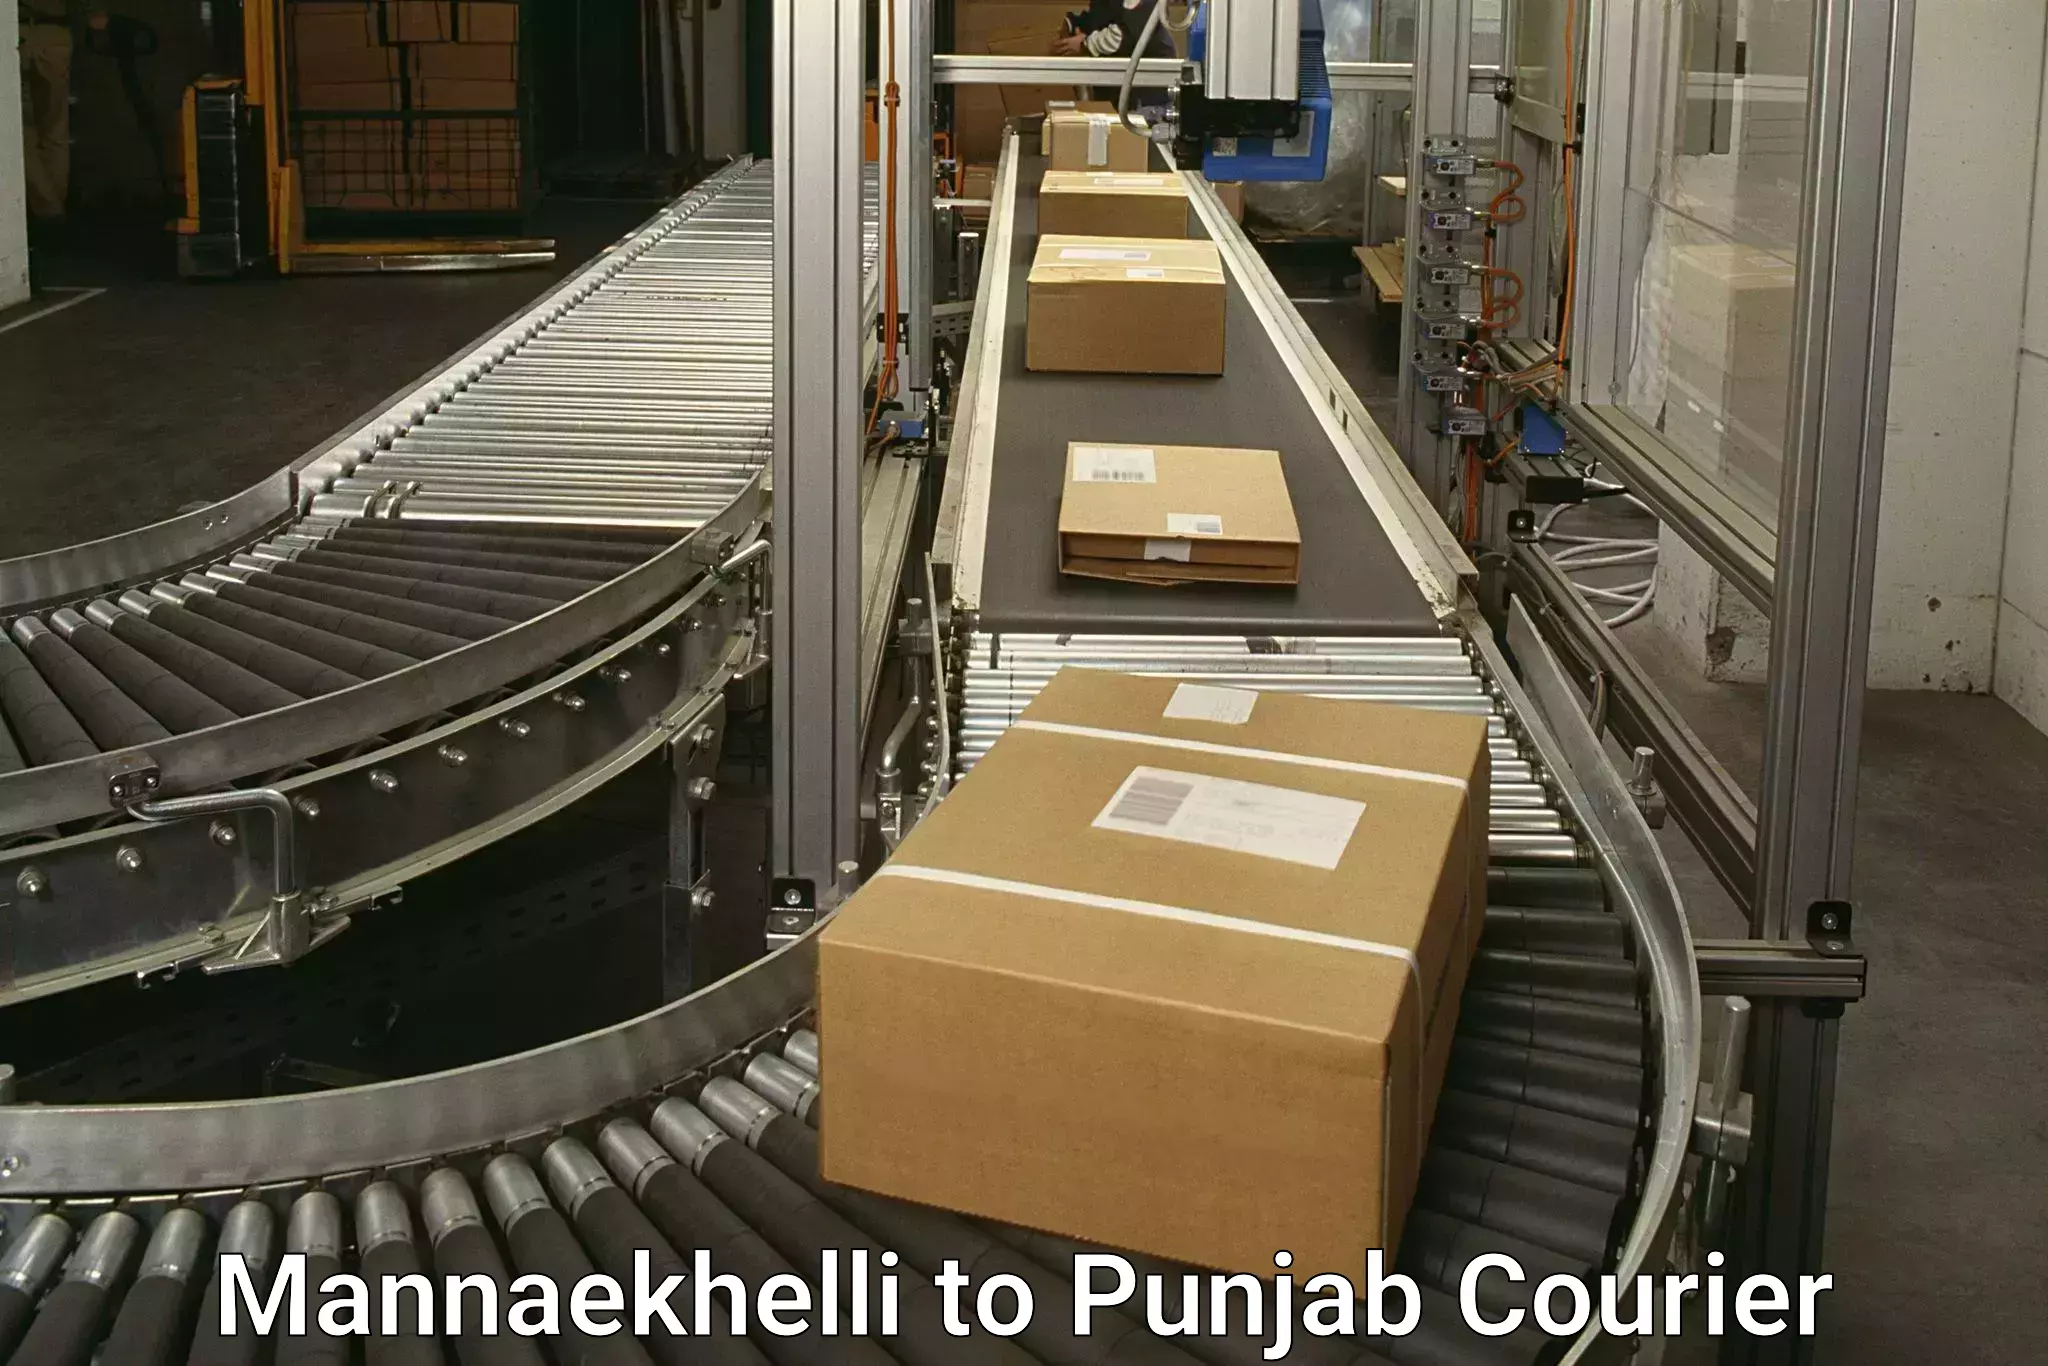 Speedy delivery service Mannaekhelli to Mohali